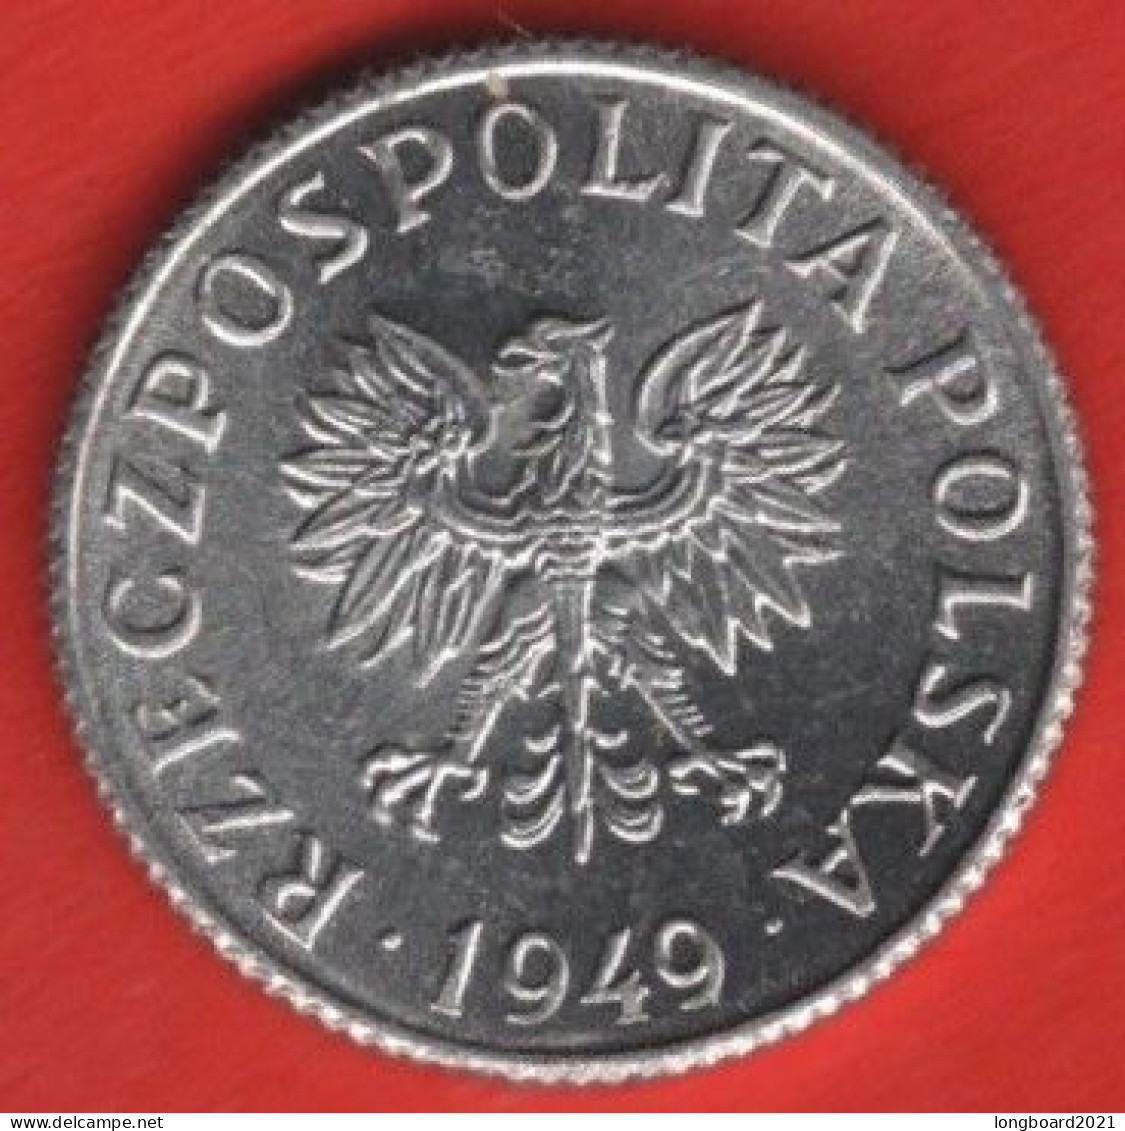 POLAND - 1 GROSZ 1949 - Polonia